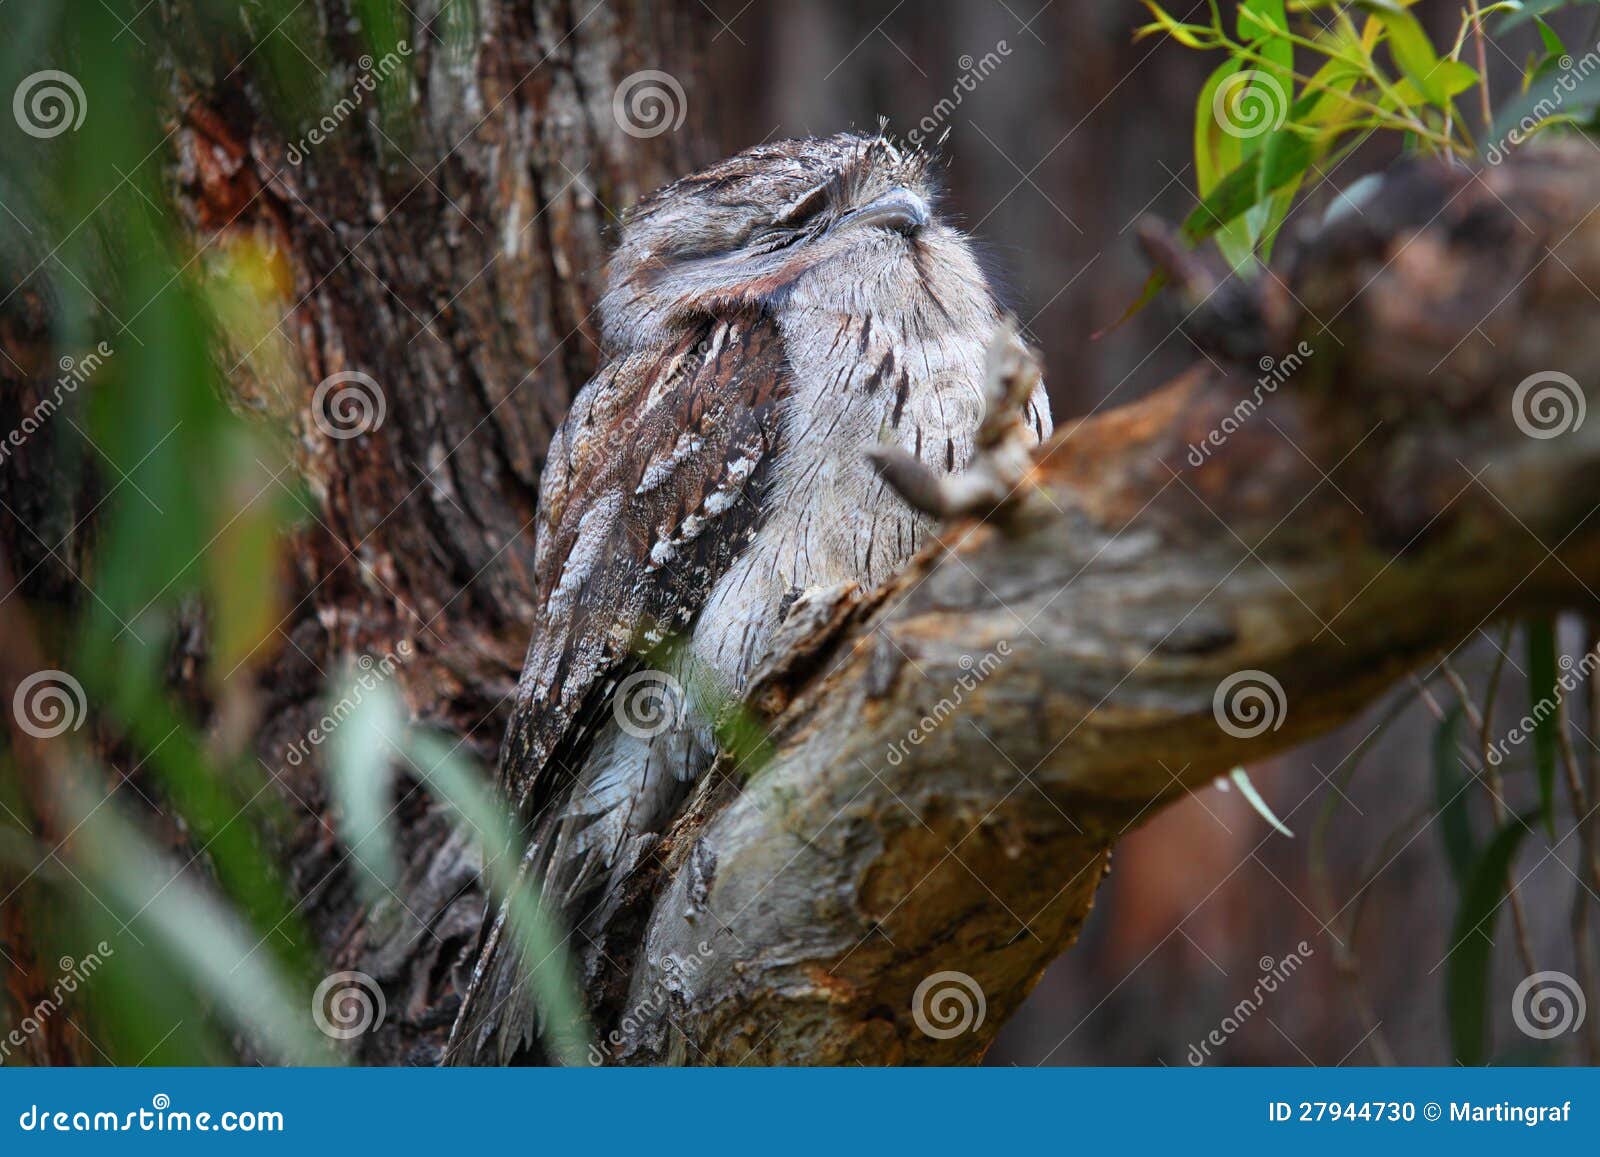 tawny frogmouth bird camouflaged in tree fork, australian wildlife